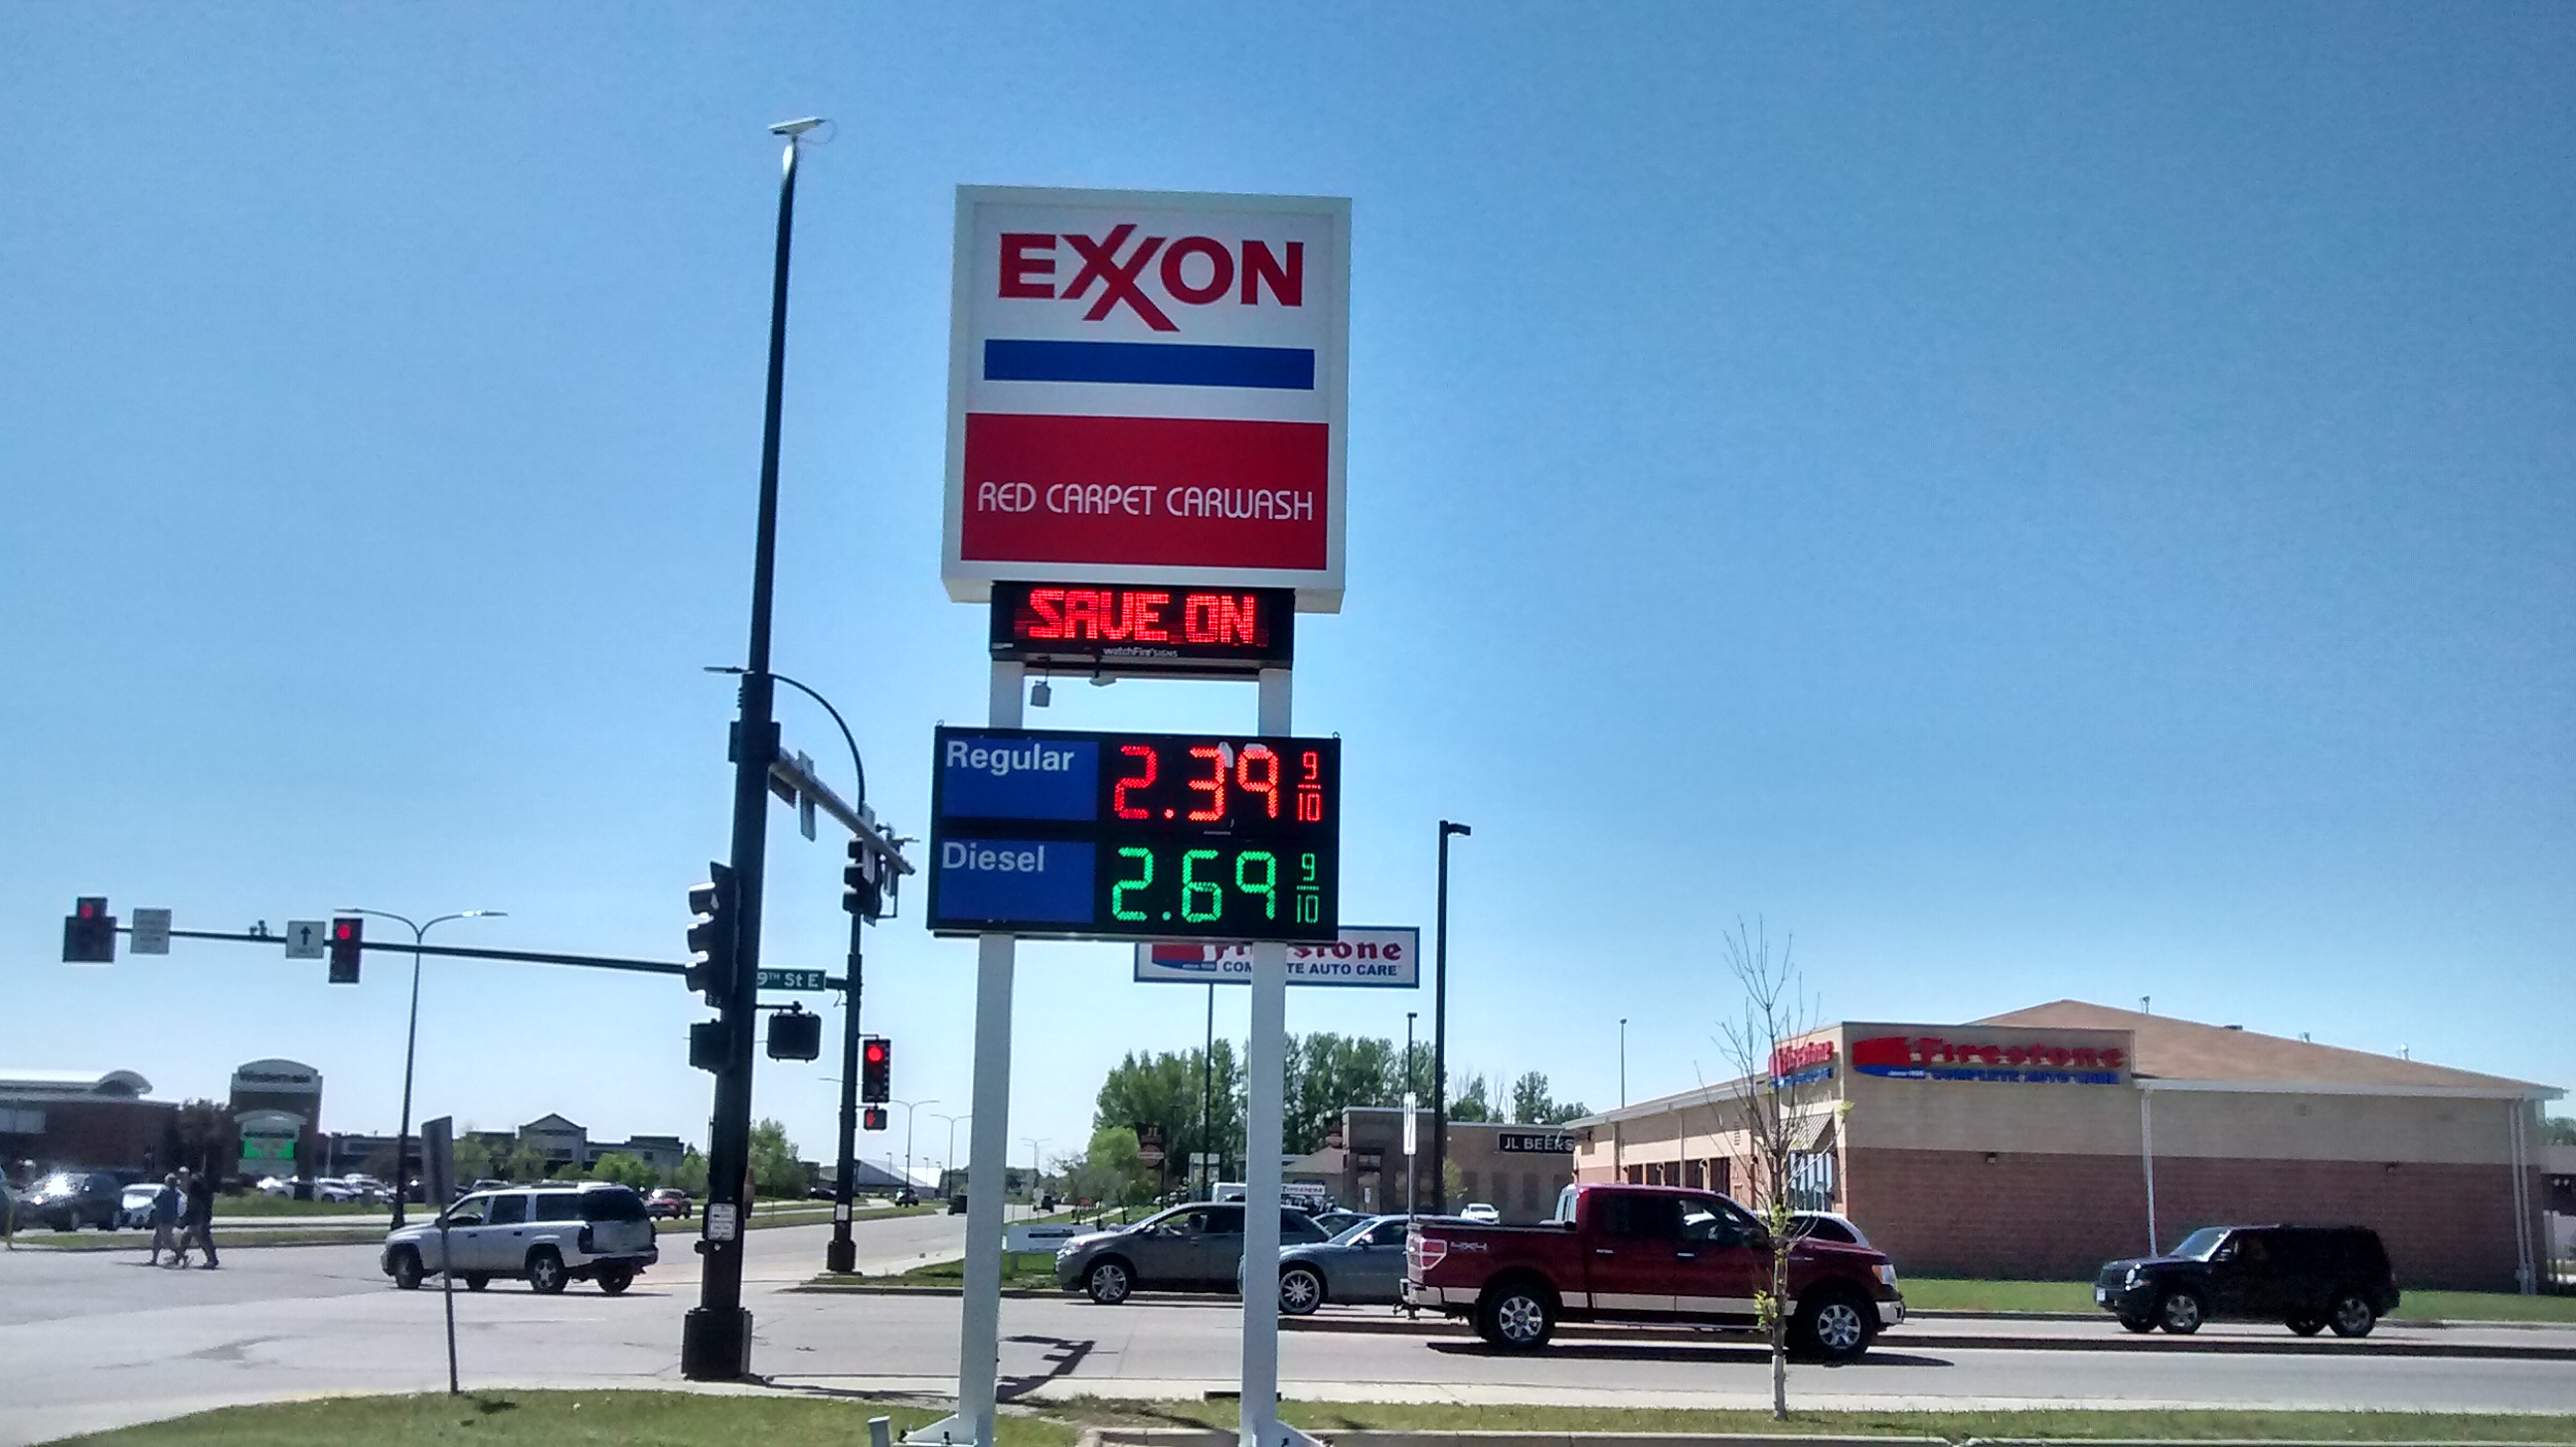 Exxon West Fargo ND